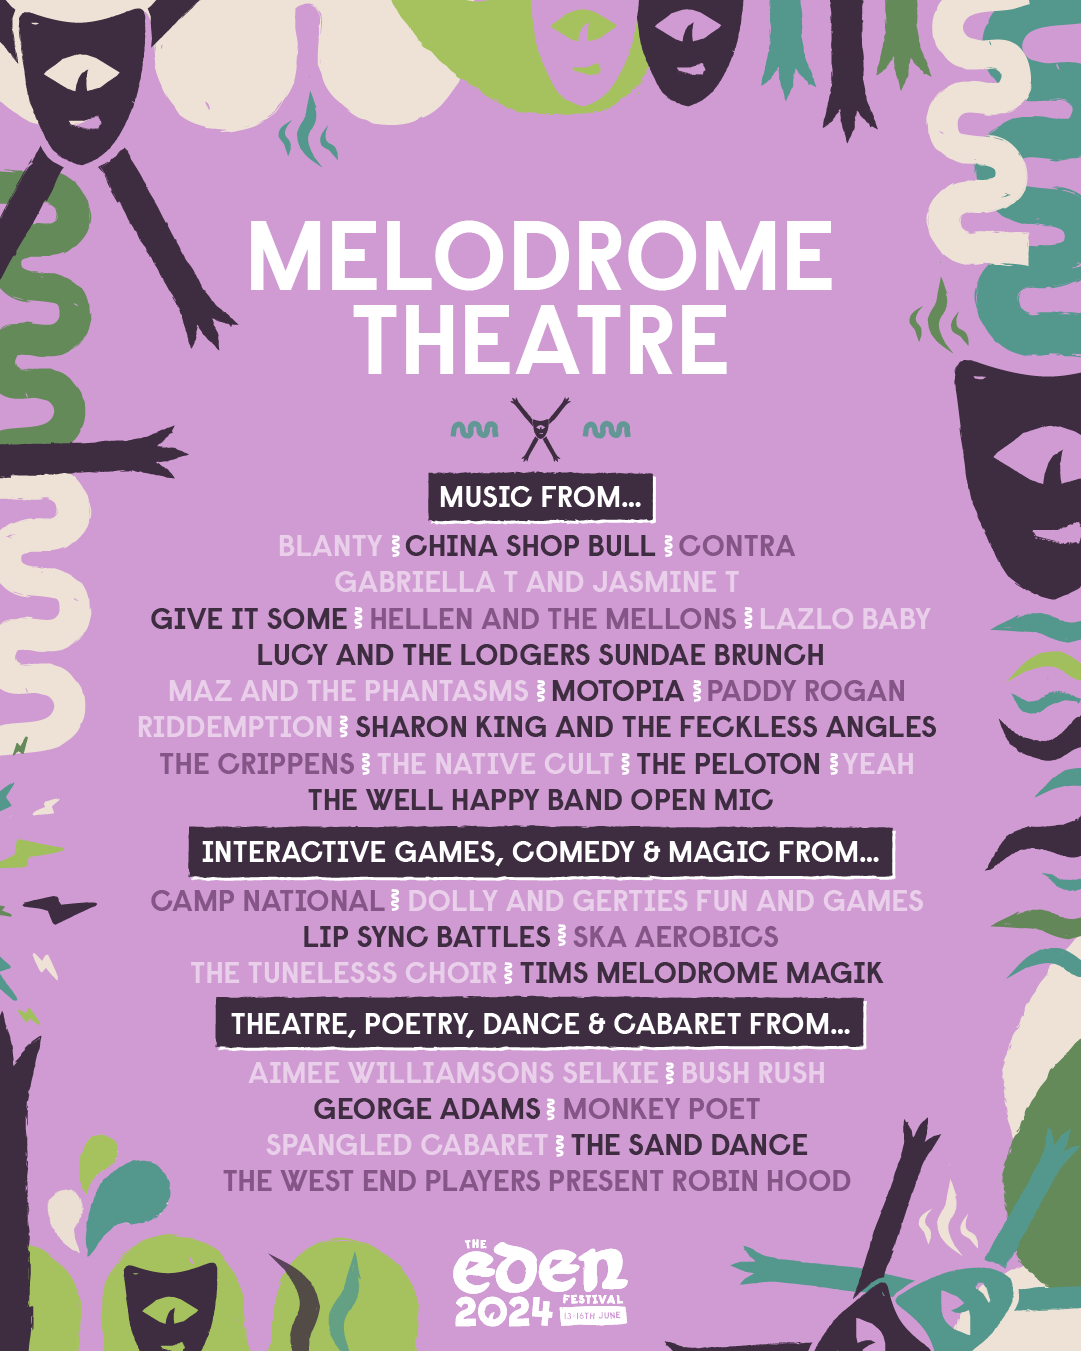 Meldrome Theatre Stage Line Up